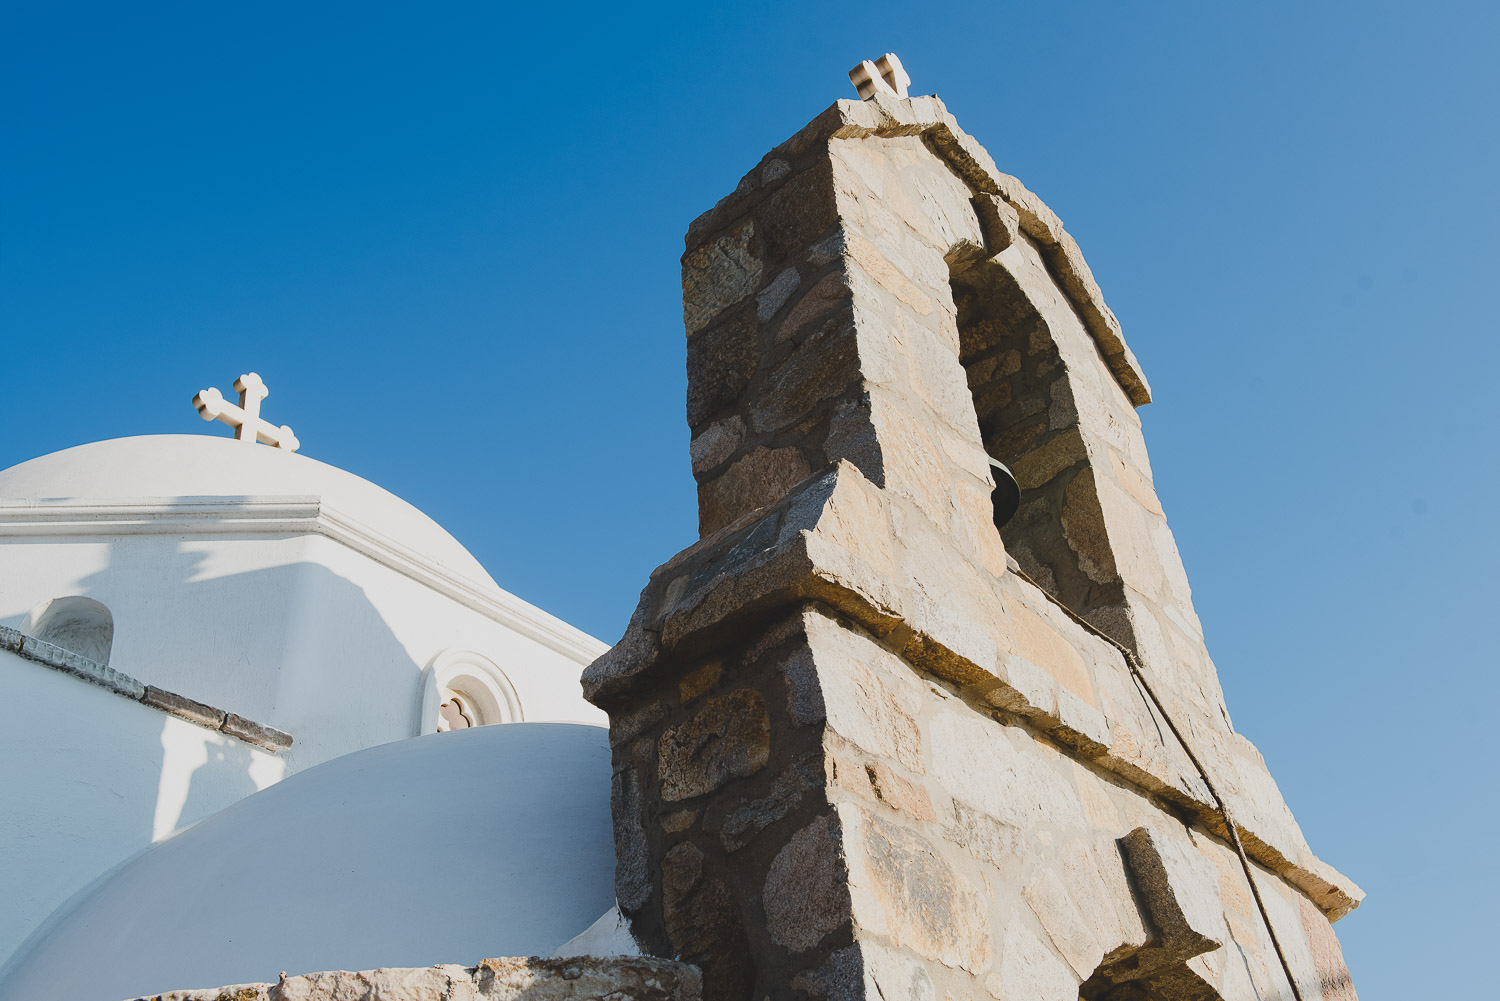 Wedding photographer Mykonos: church bell tower at Mykonos wedding.